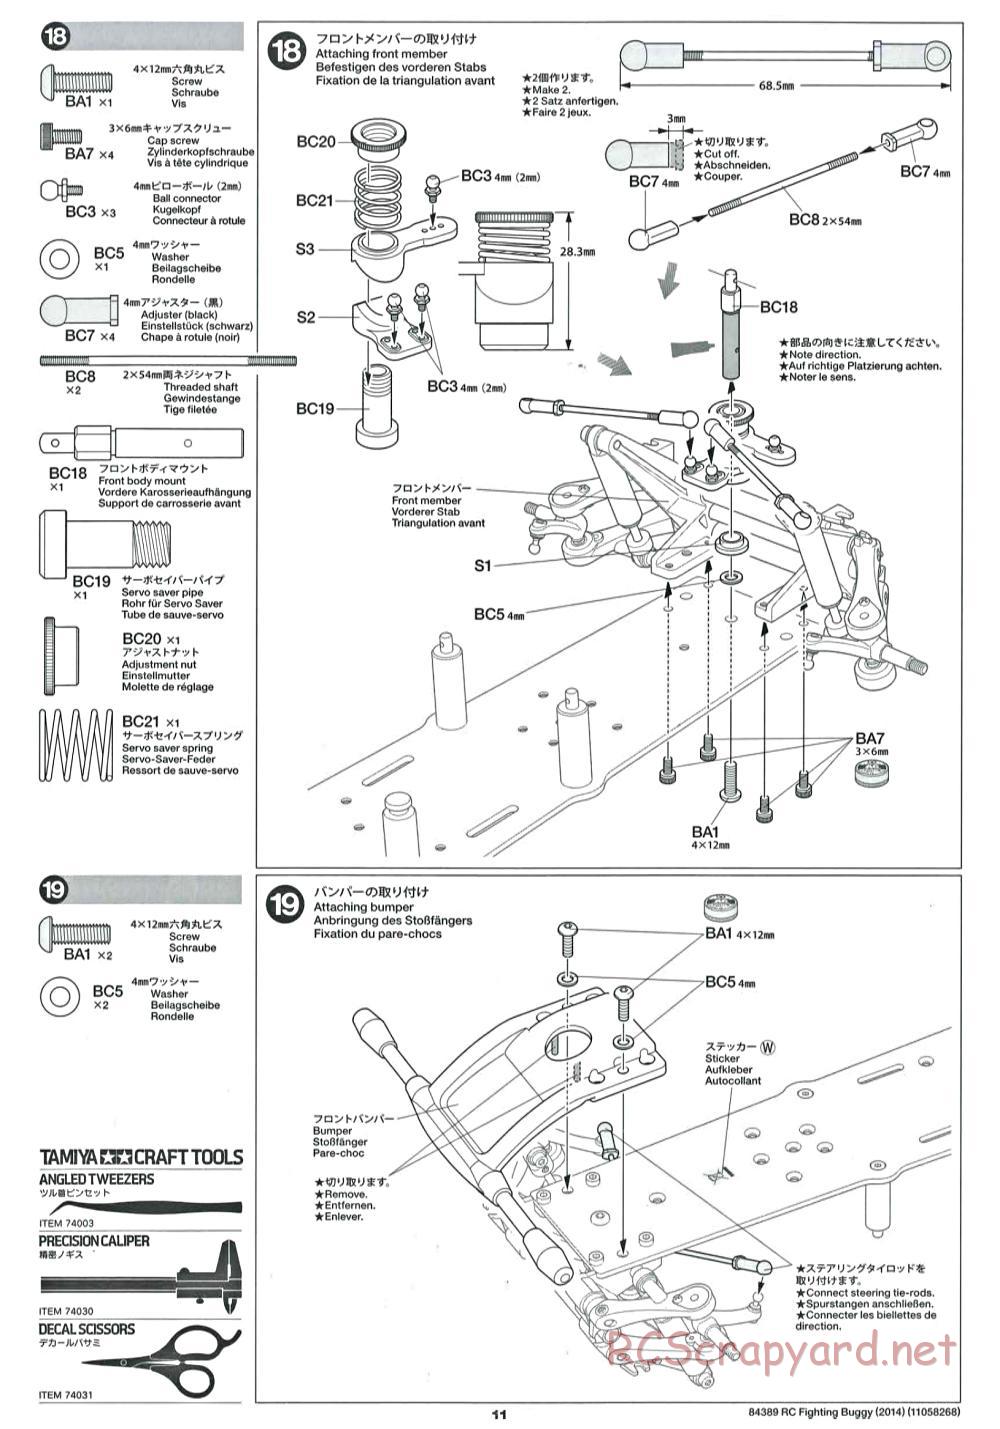 Tamiya - Fighting Buggy (2014) Chassis - Manual - Page 11